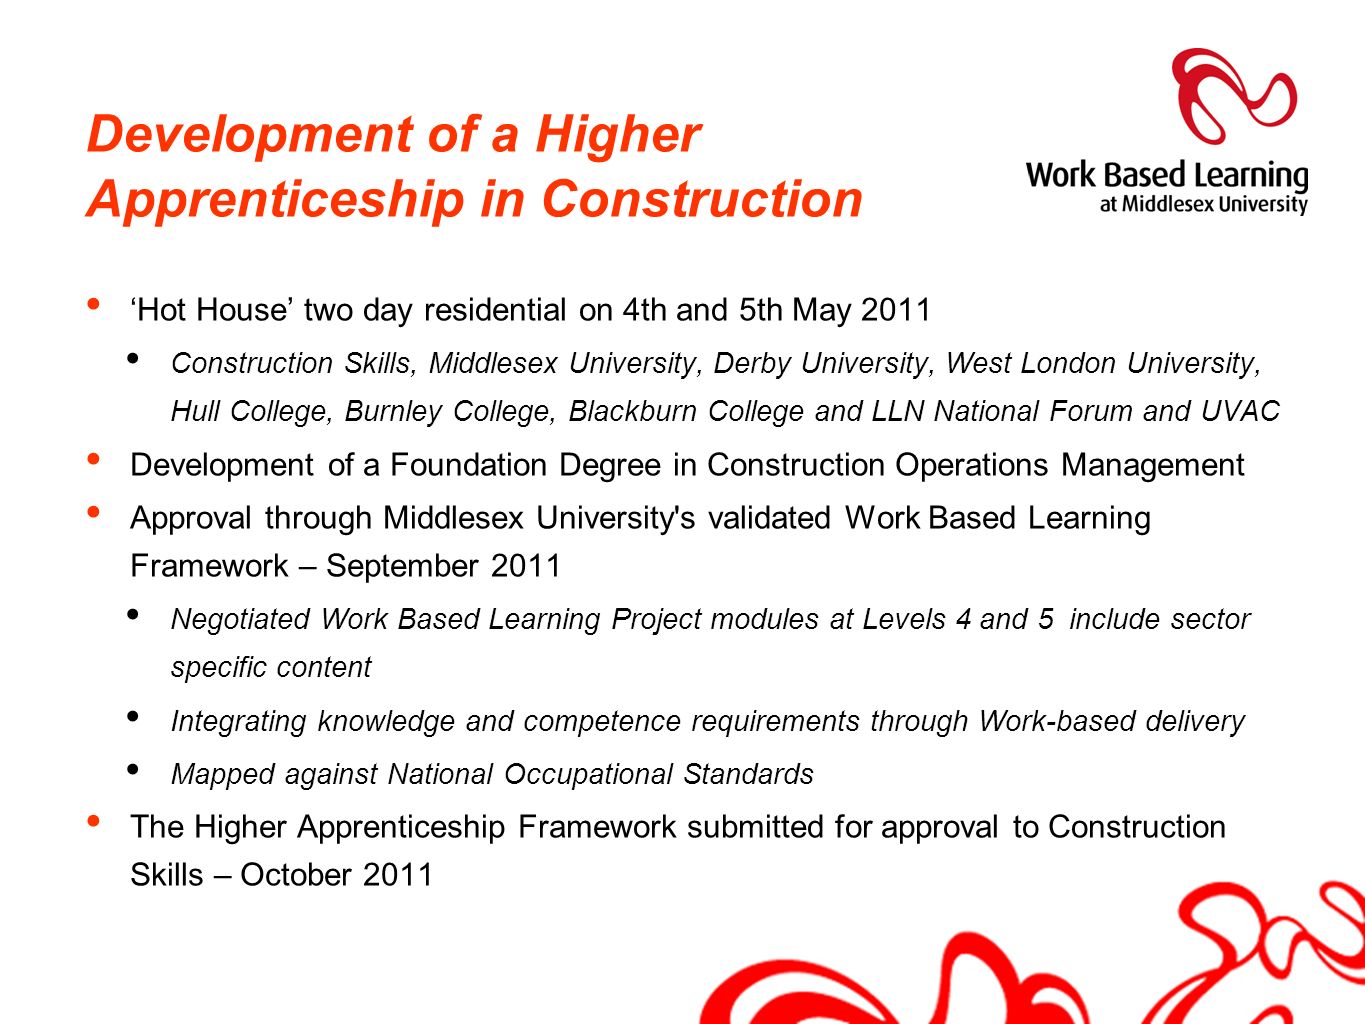 Development of a Higher Apprenticeship in Construction